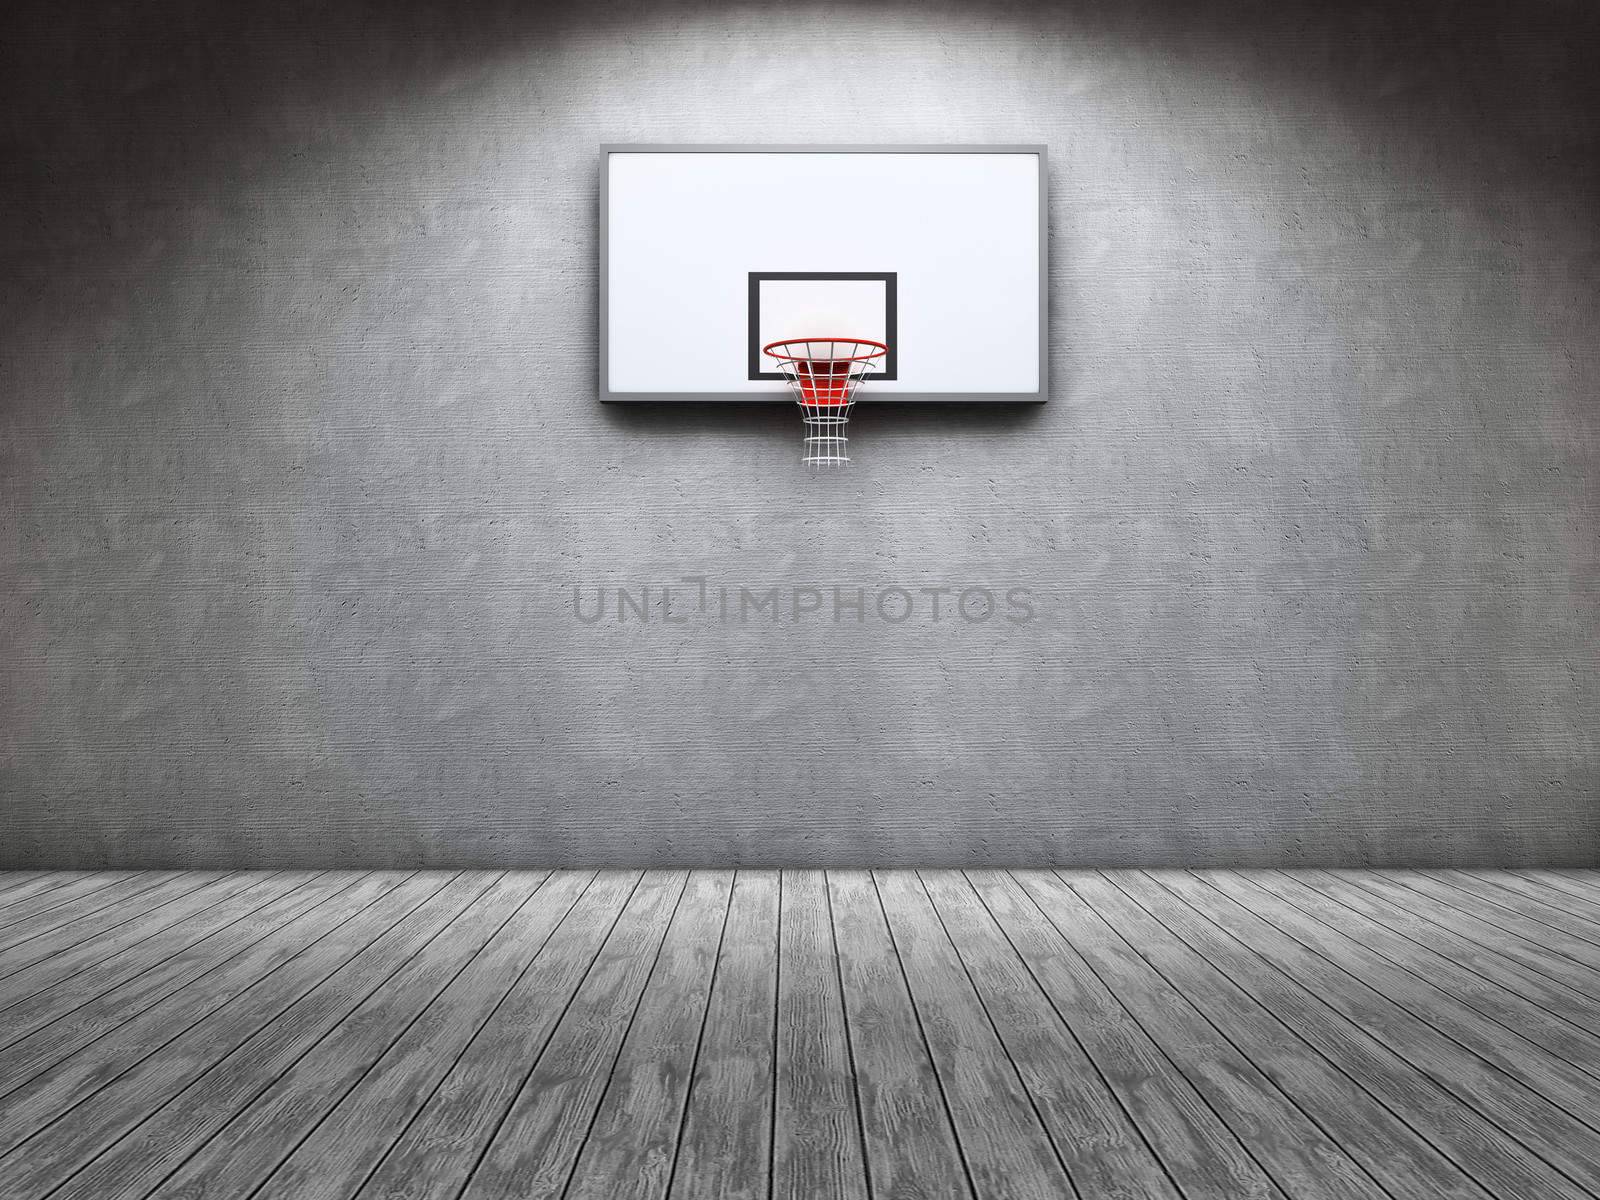 Basketball by dynamicfoto